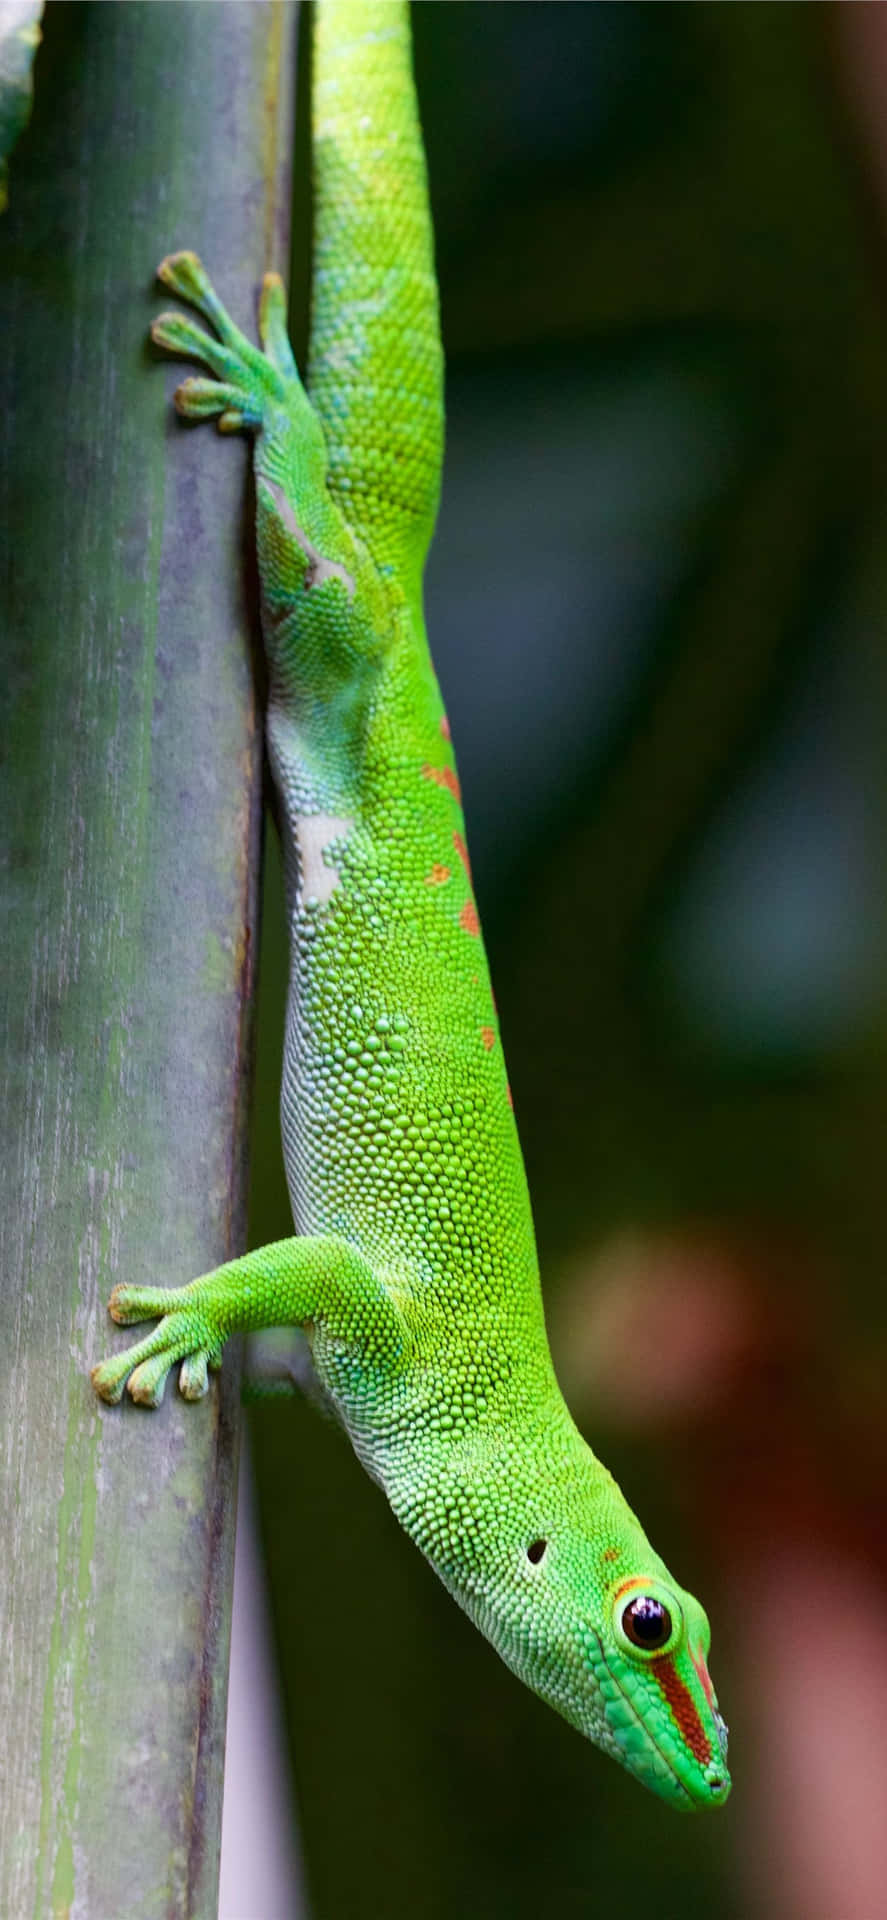 Green Lizard Climbing Down Picture